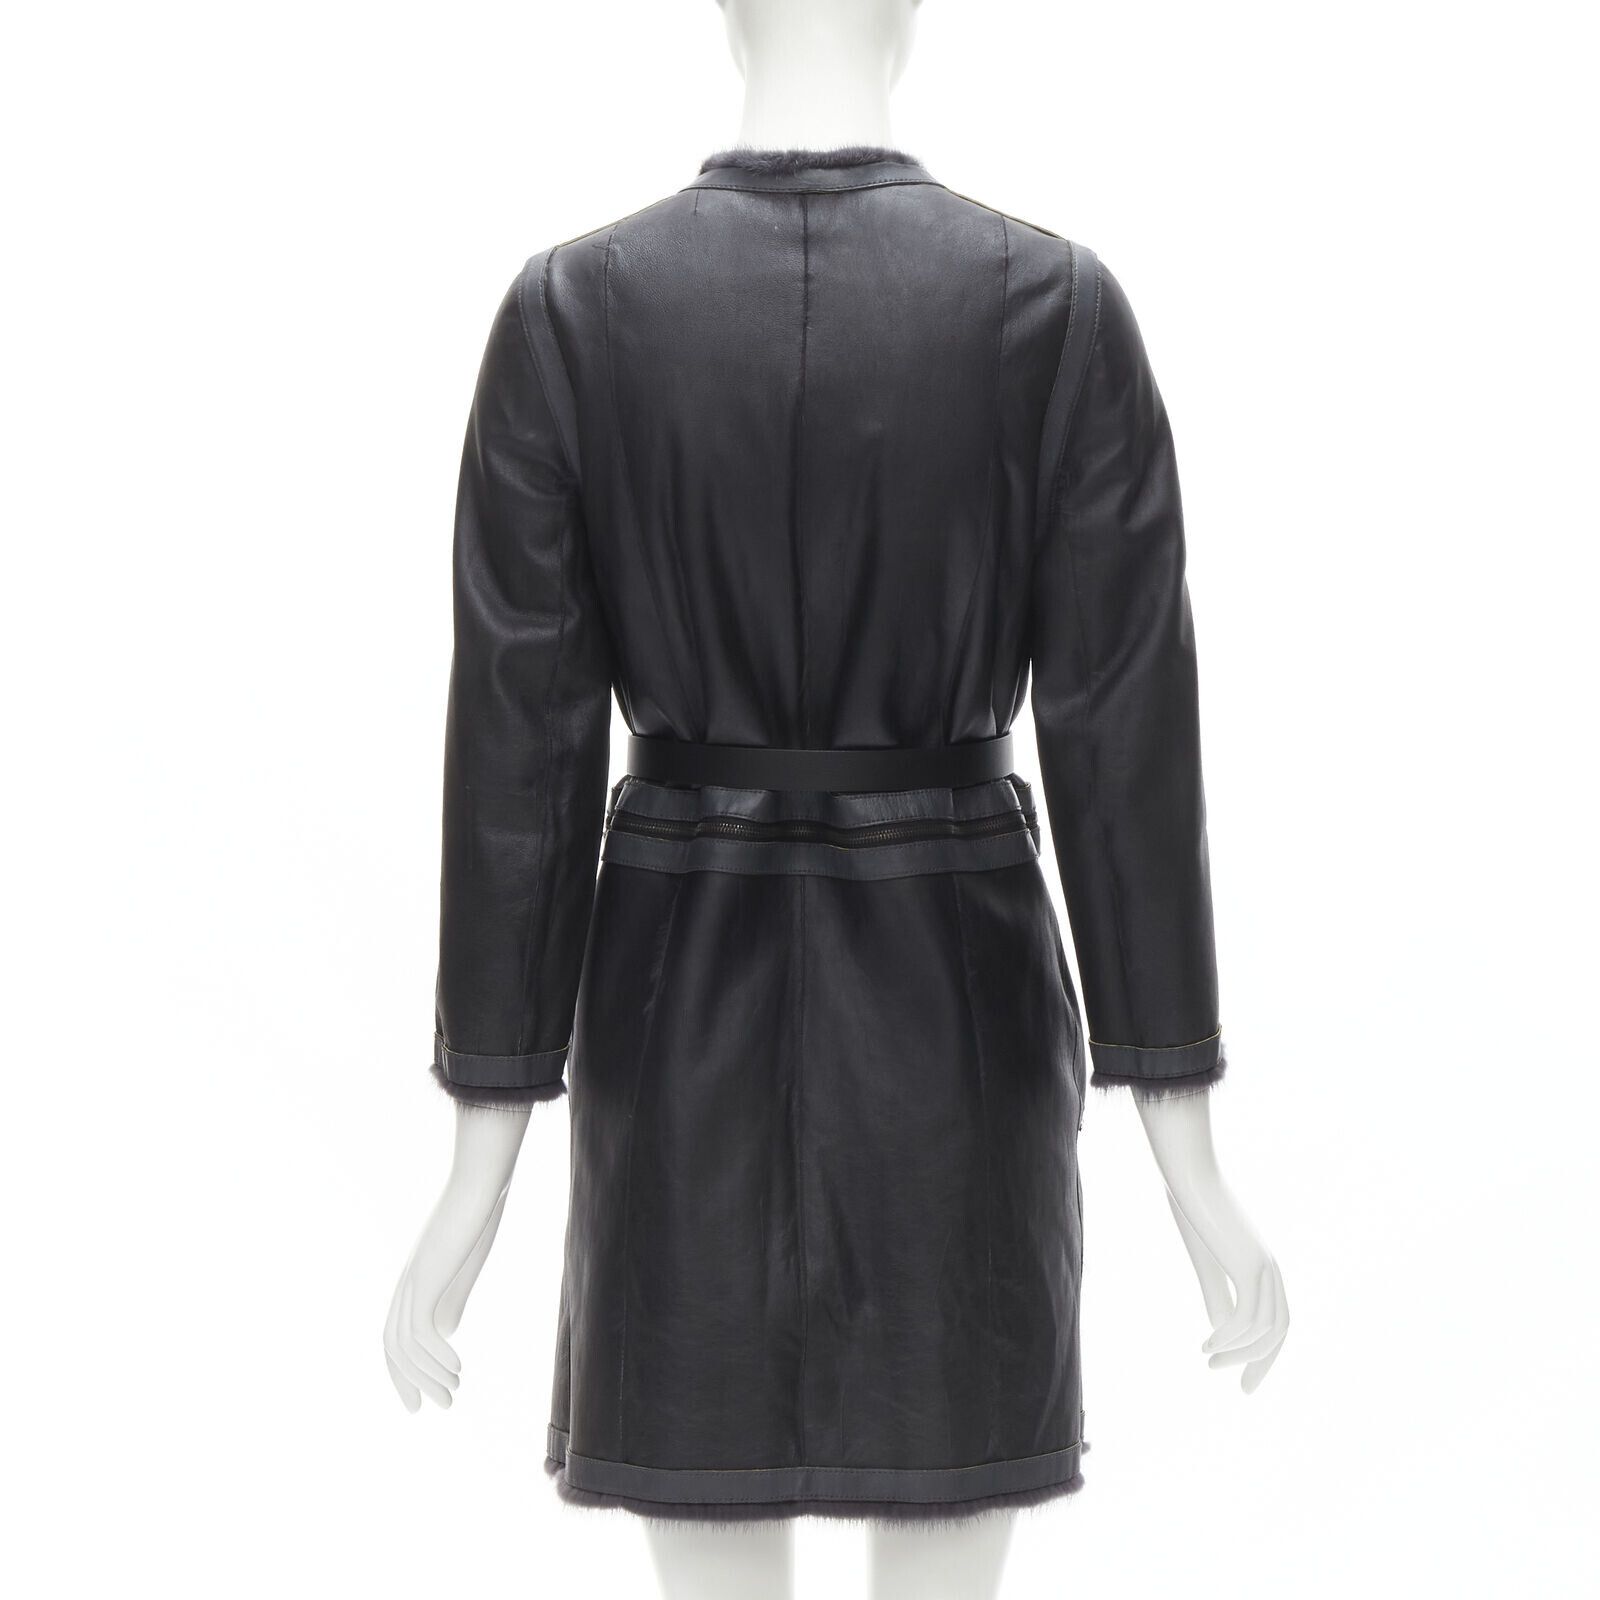 Fendi FENDI grey black fur leather 4-way reversible zip belted coat jacket IT38 Size XS / US 0-2 / IT 36-38 - 8 Thumbnail